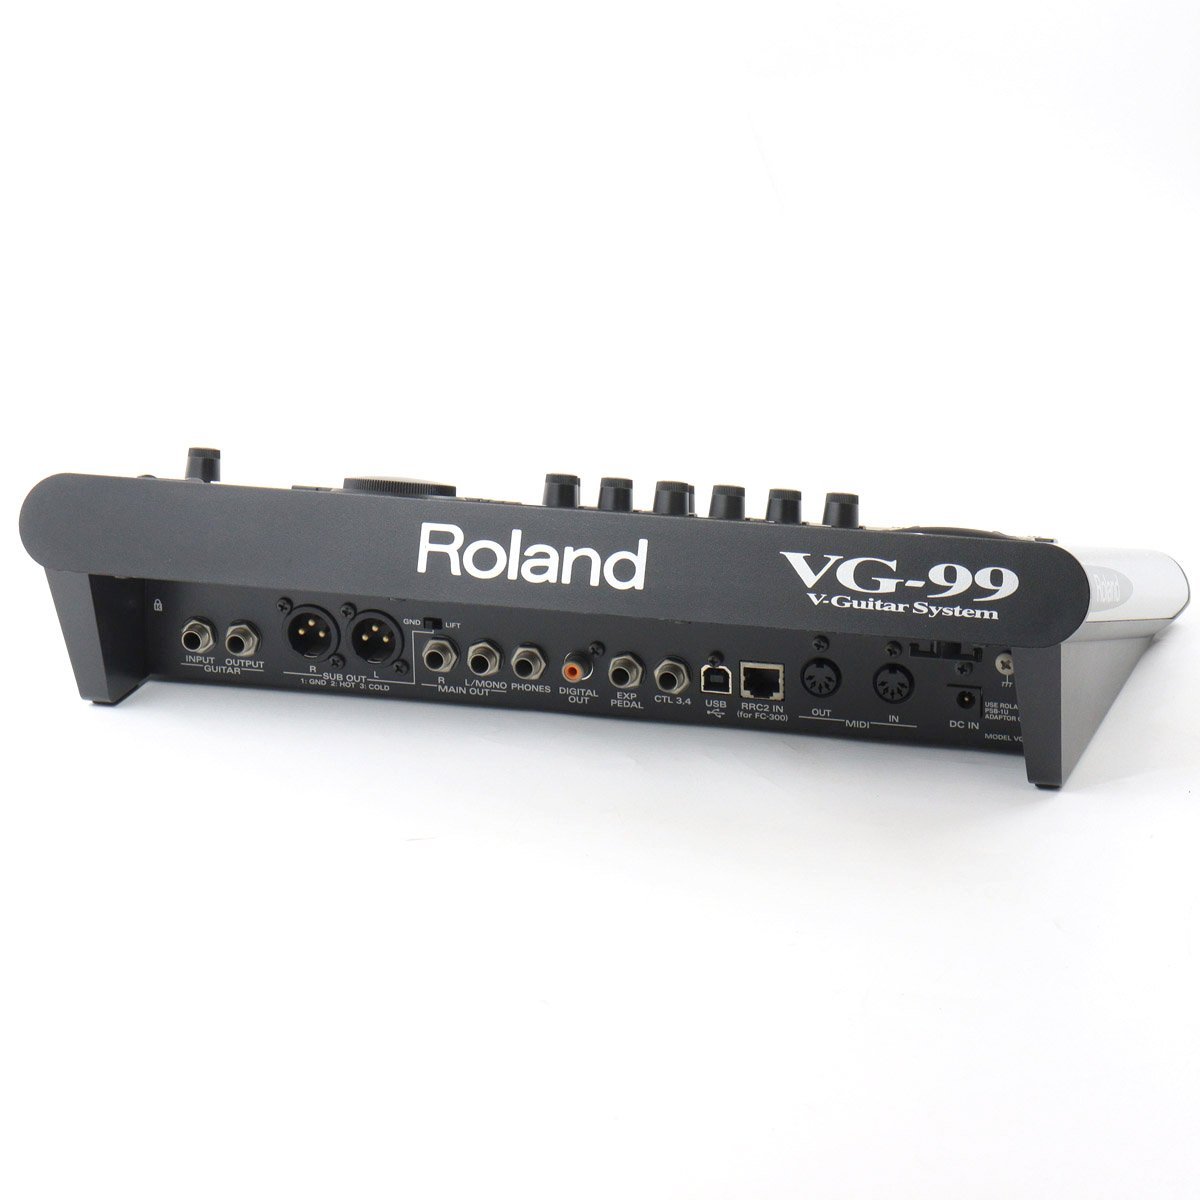 Roland VG-99 V-Guitar System ギター用 シンセサイザー【池袋店 